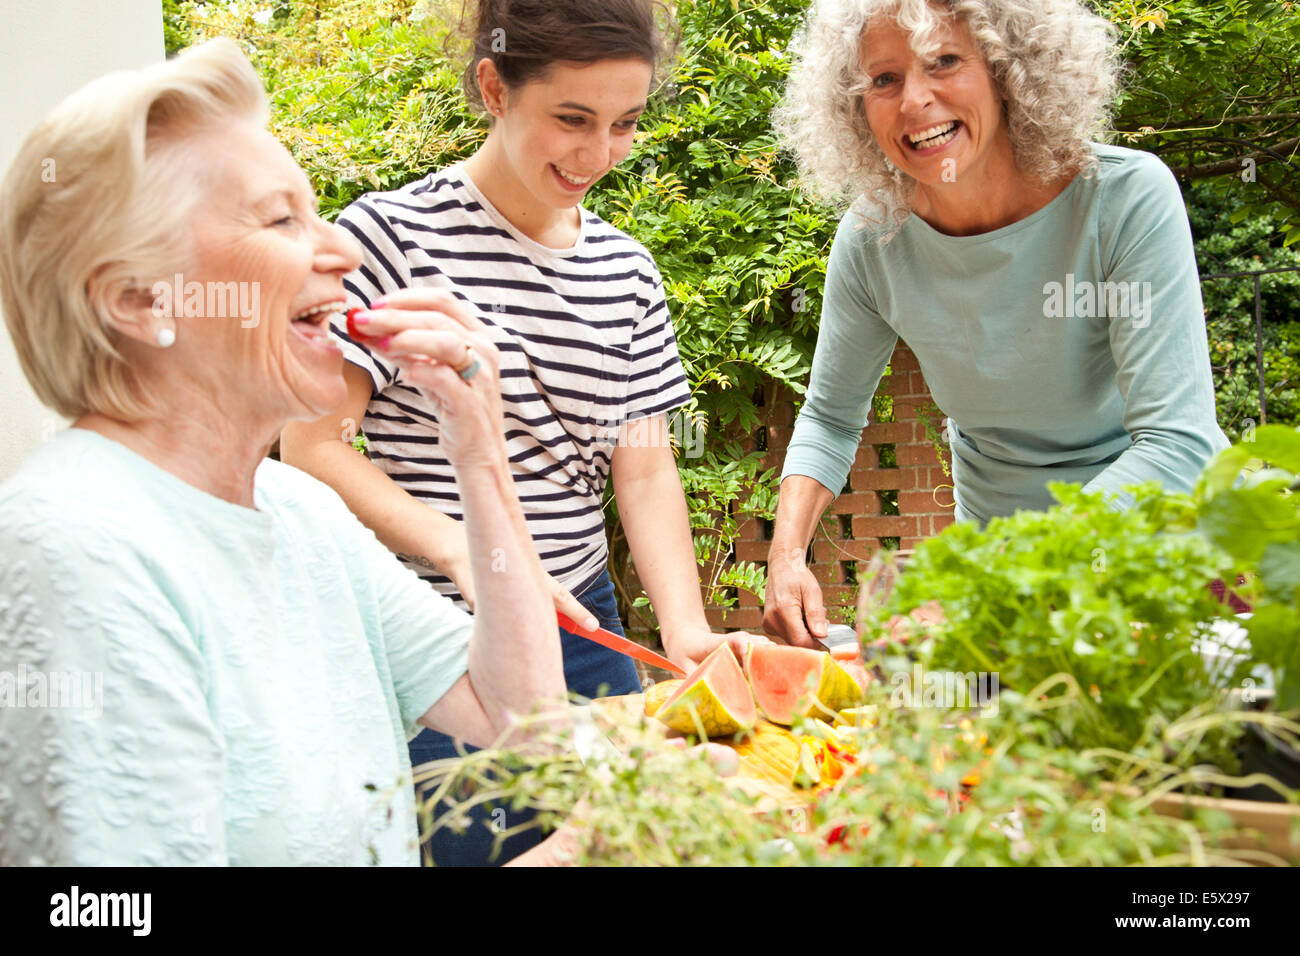 Three women preparing food at garden table Stock Photo